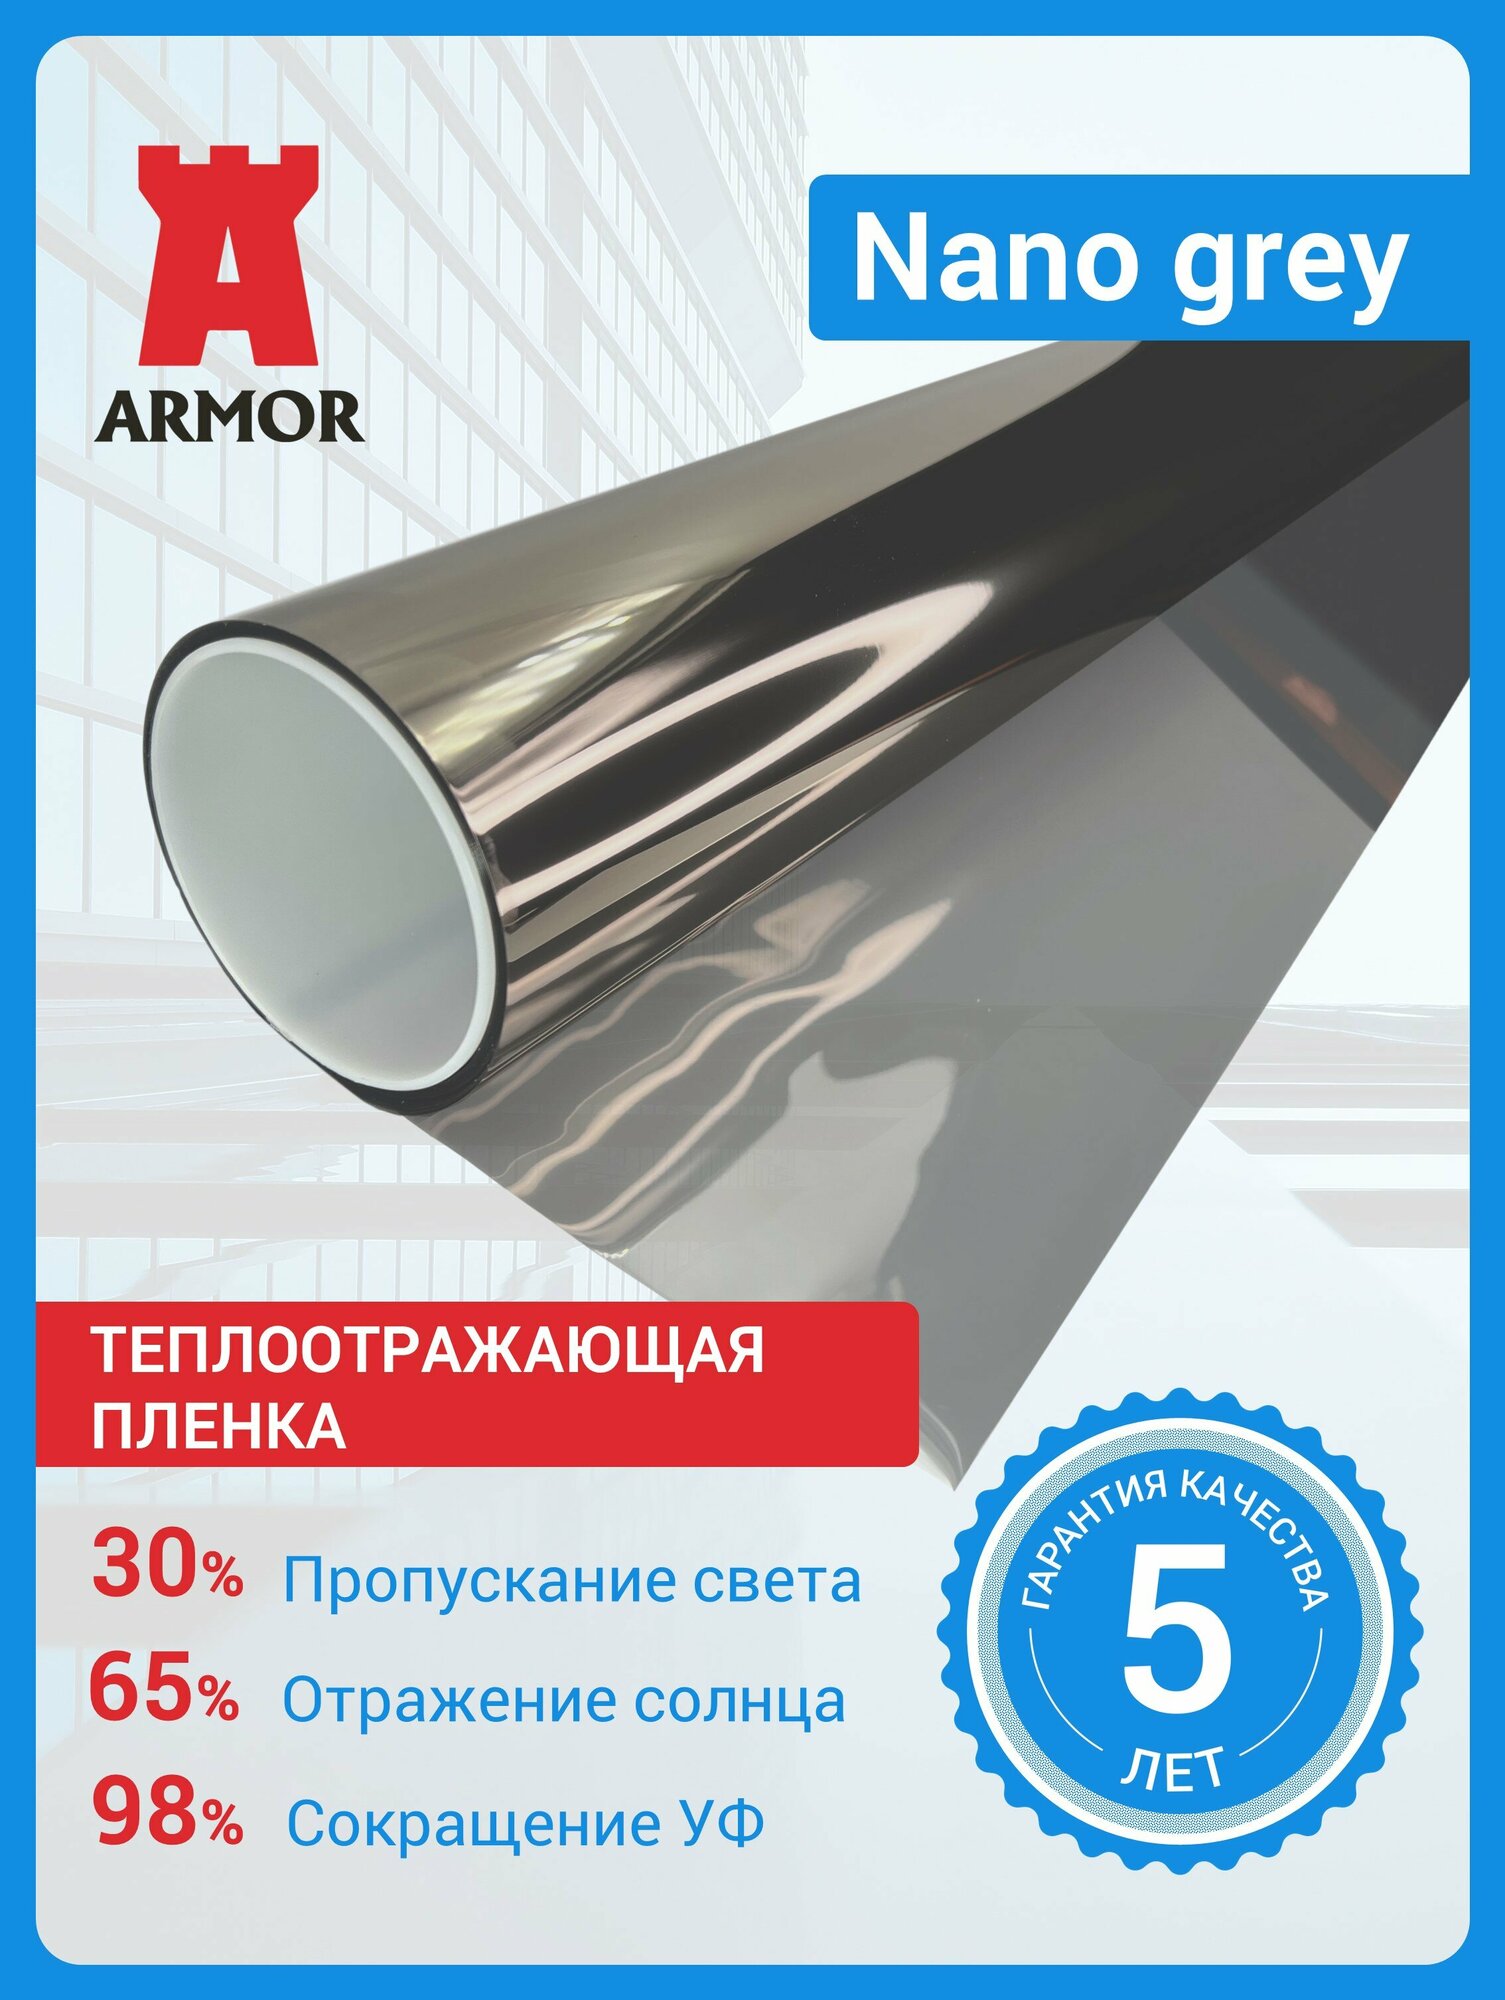 Самоклеющаяся теплоотражающая пленка для окон Nano Grey, цвет - серый, размер 0,75 м. х 3 м. (75х300 см)